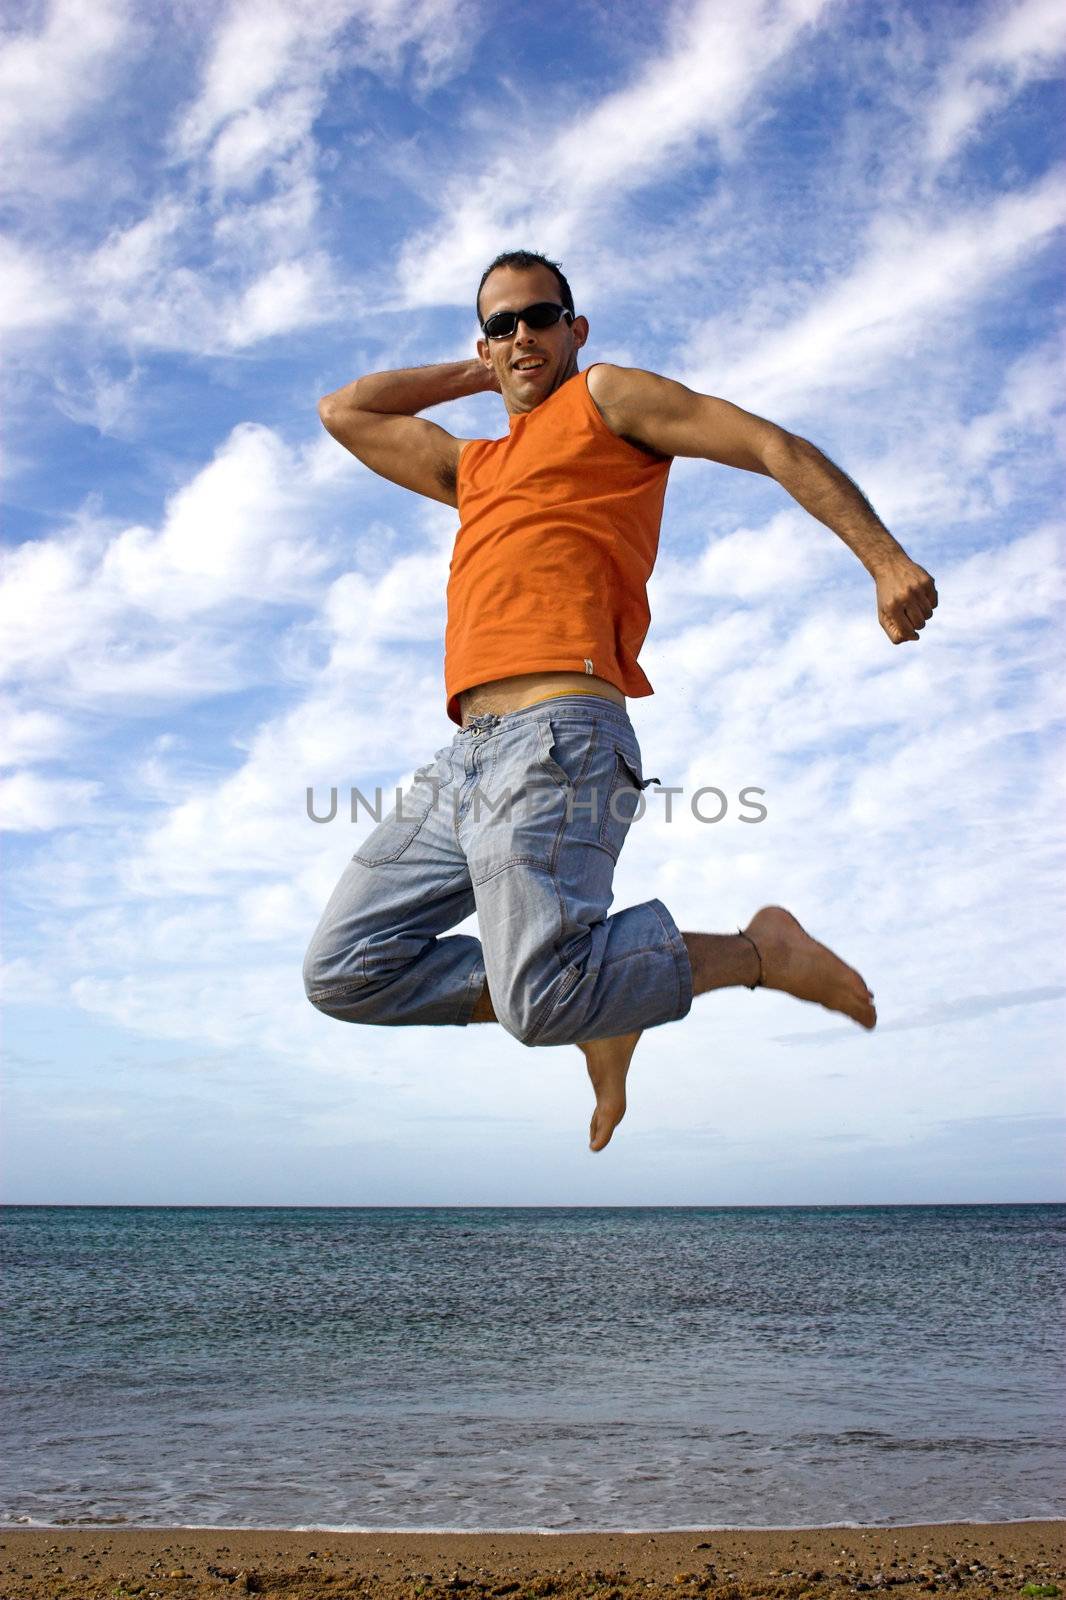 Young active man making a big jump by Iko